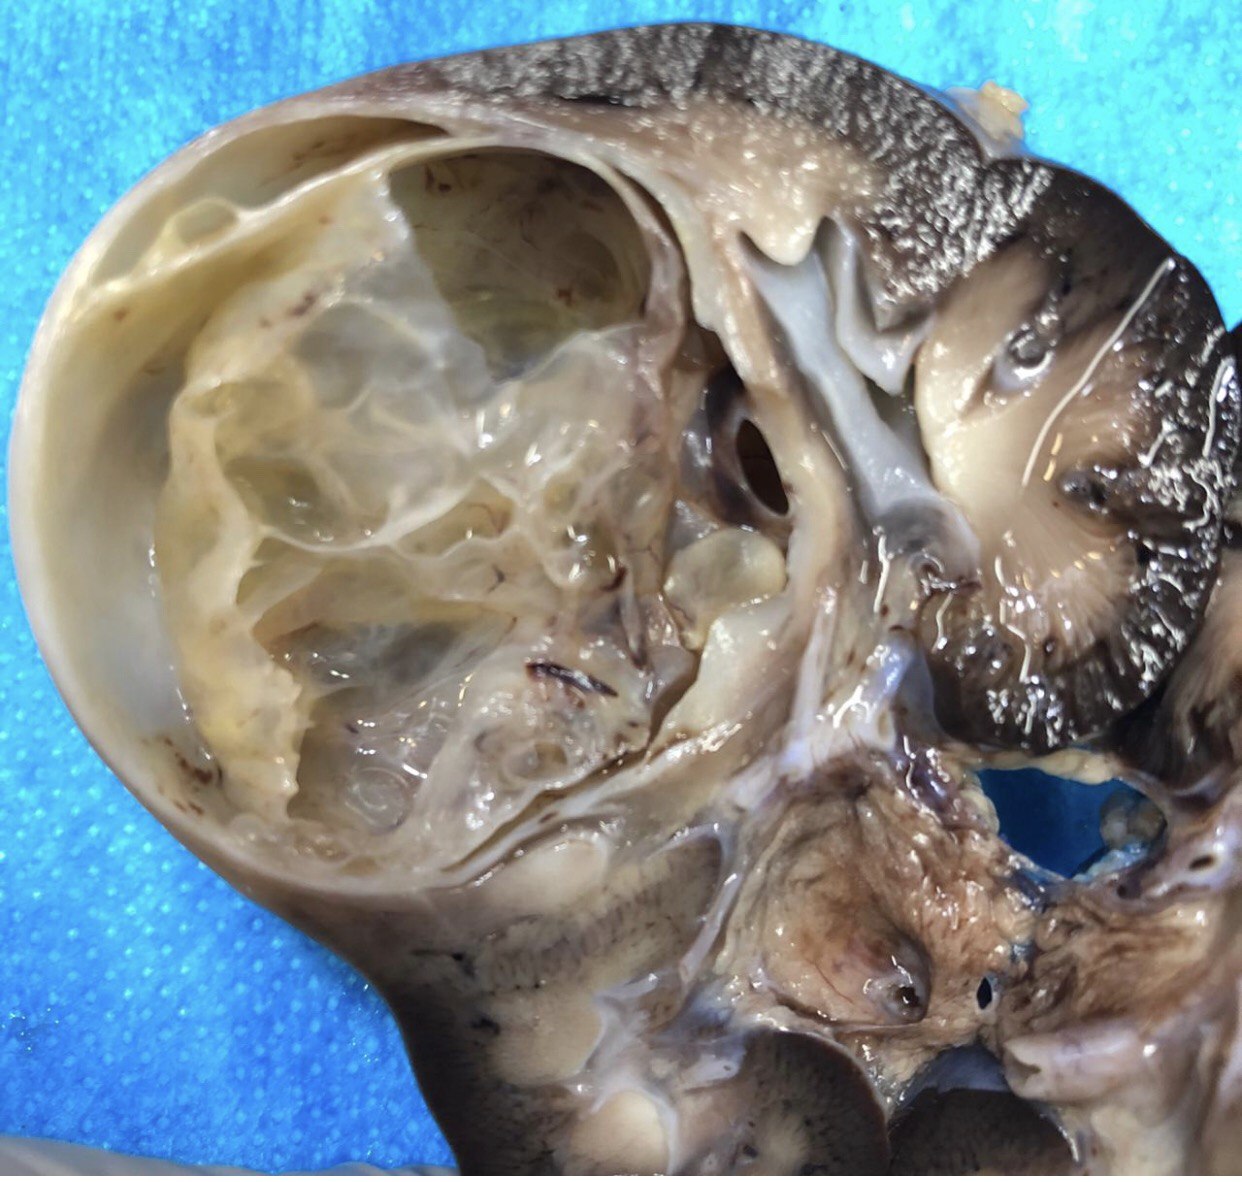 Multilocular cyst of the kidney